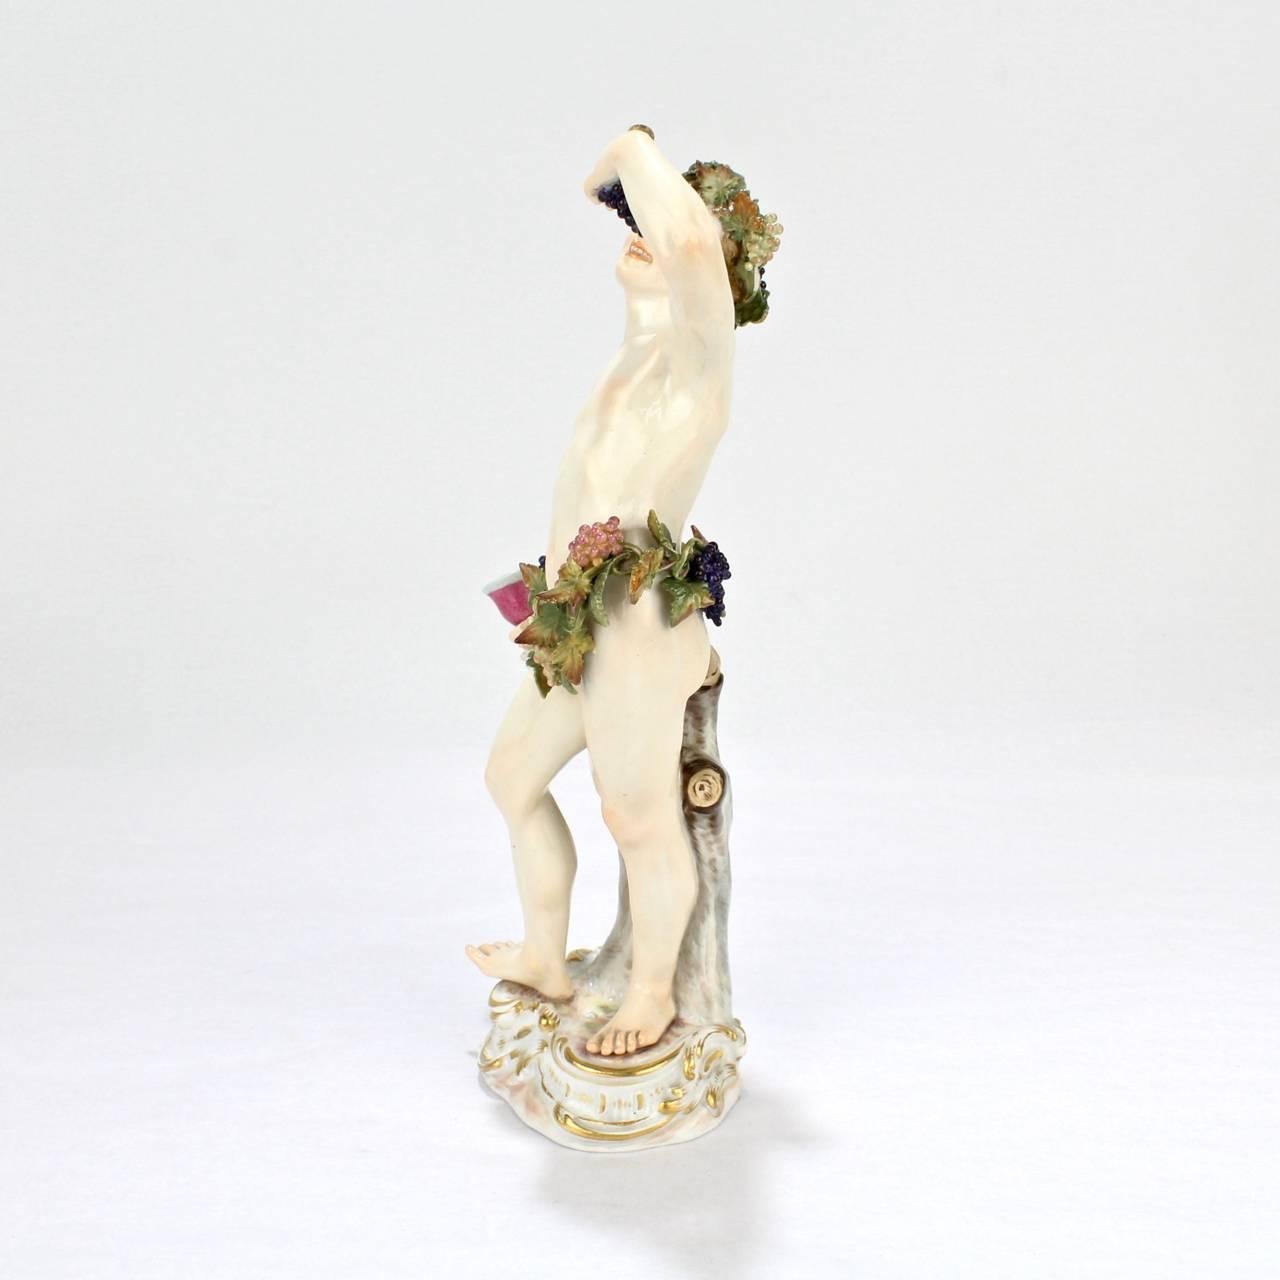 Rococo Antique Meissen Porcelain Allegorical Figurine of Bacchus the God of Wine